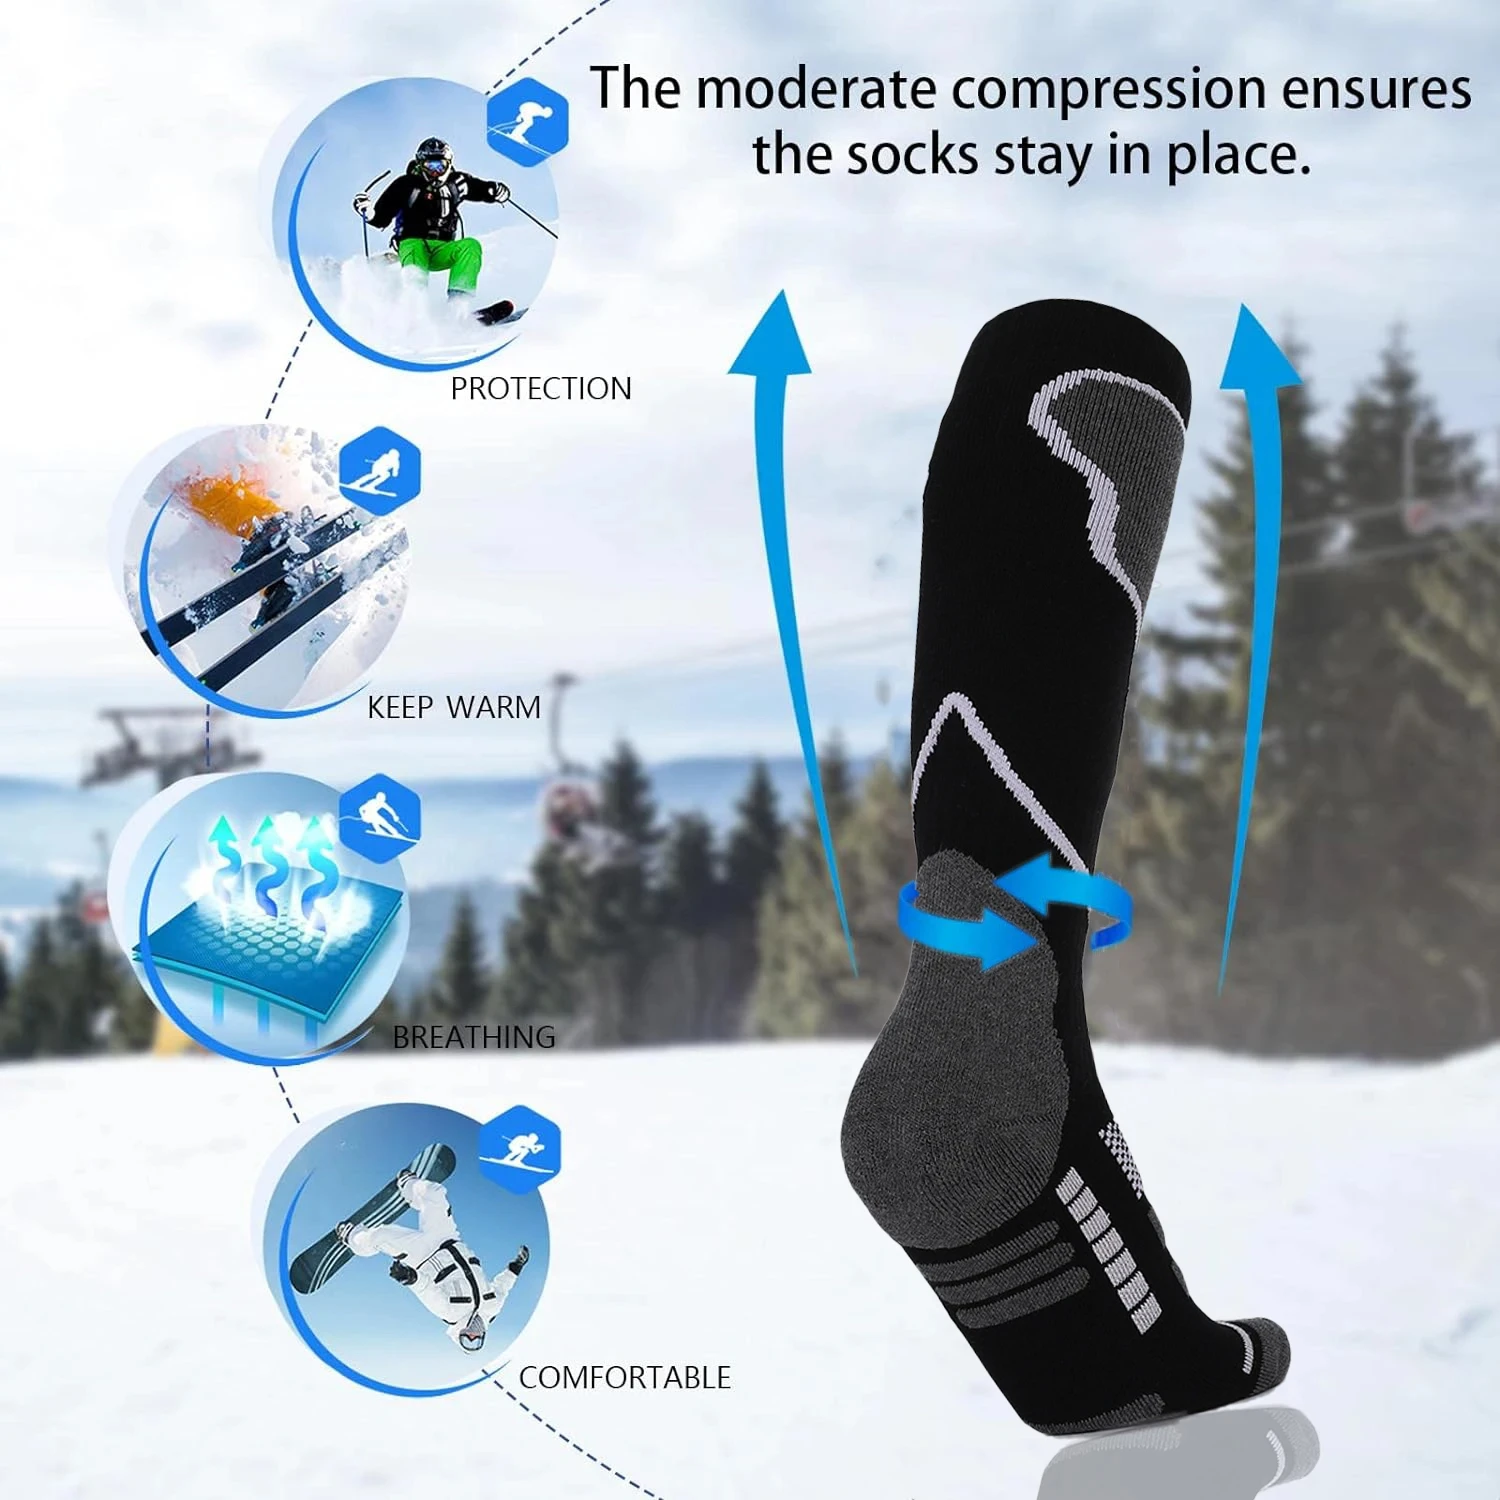 

1 Pair Of Merino Wool Ski Socks For Snowboarding Winter Outdoor Sports Performance Socks Warm Socks For Men And Women In Winter